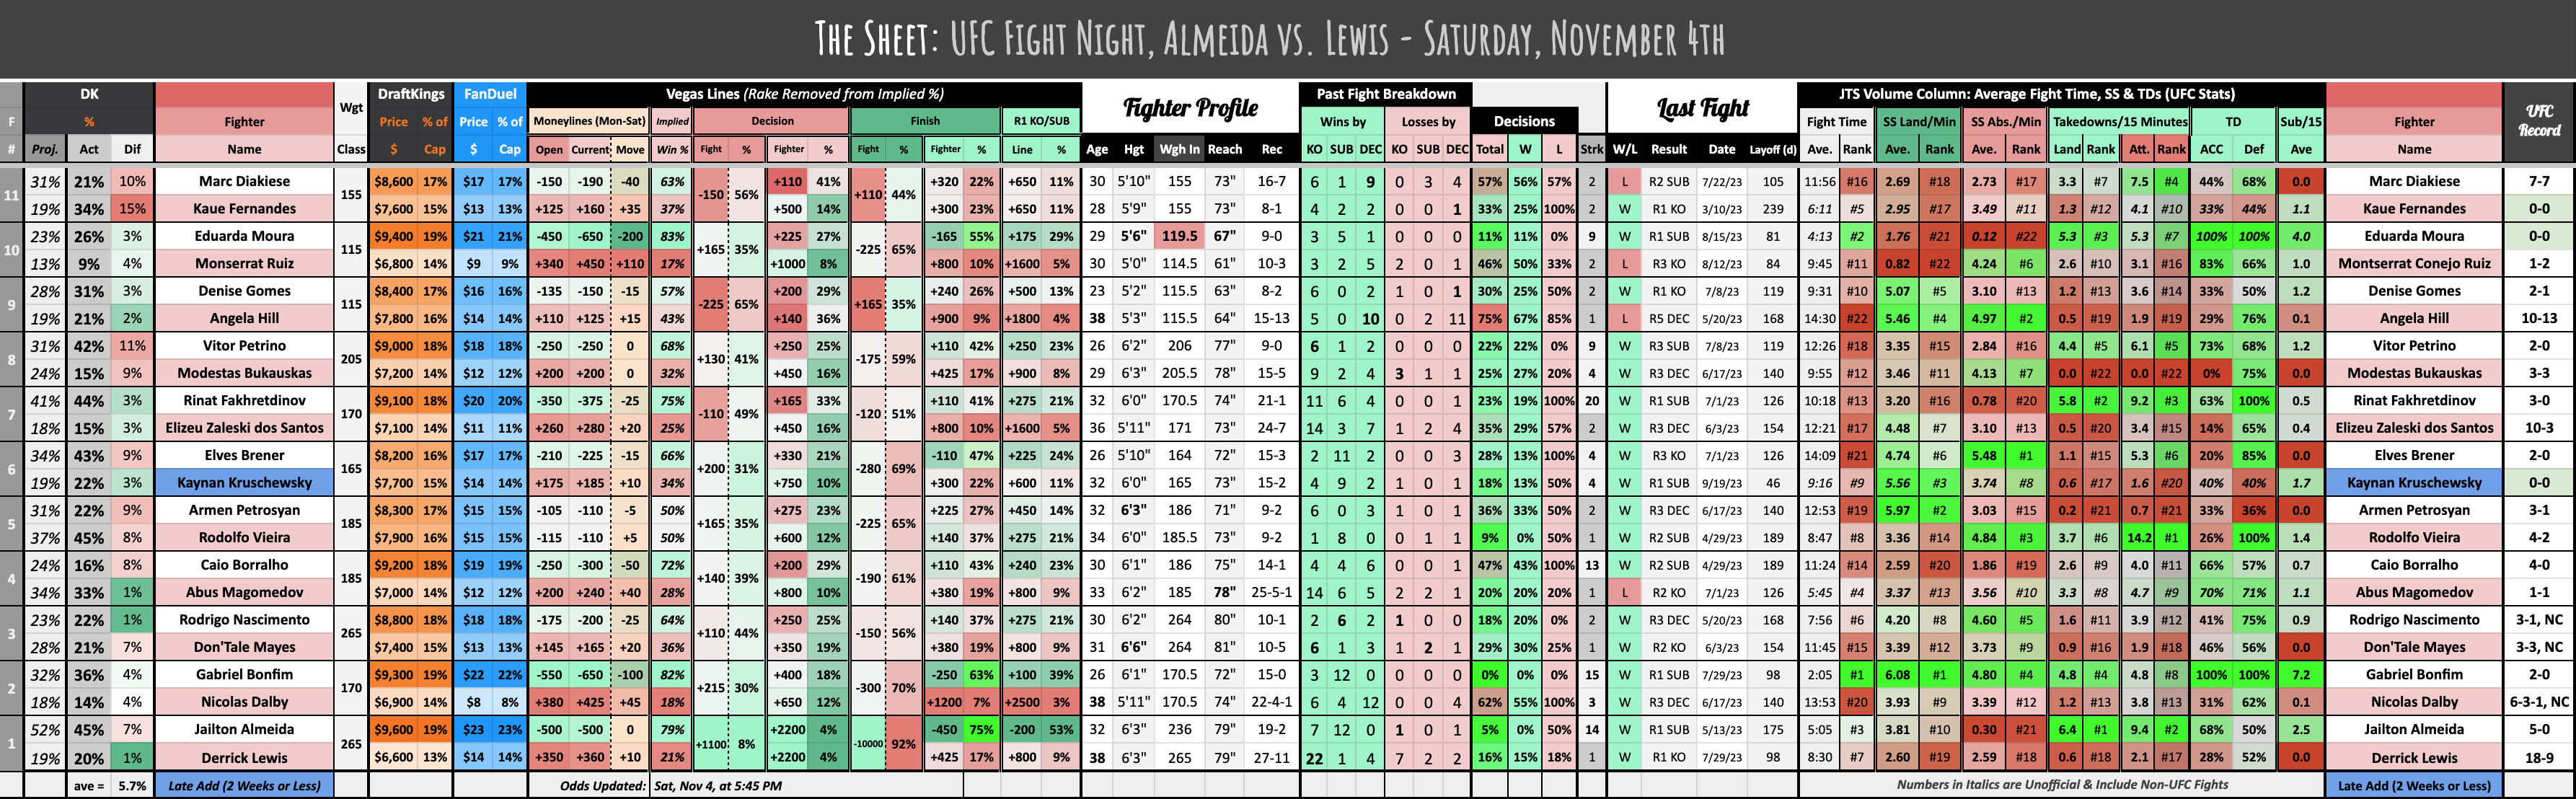 UFC Fight Night, Almeida vs. Lewis - Saturday, November 4th